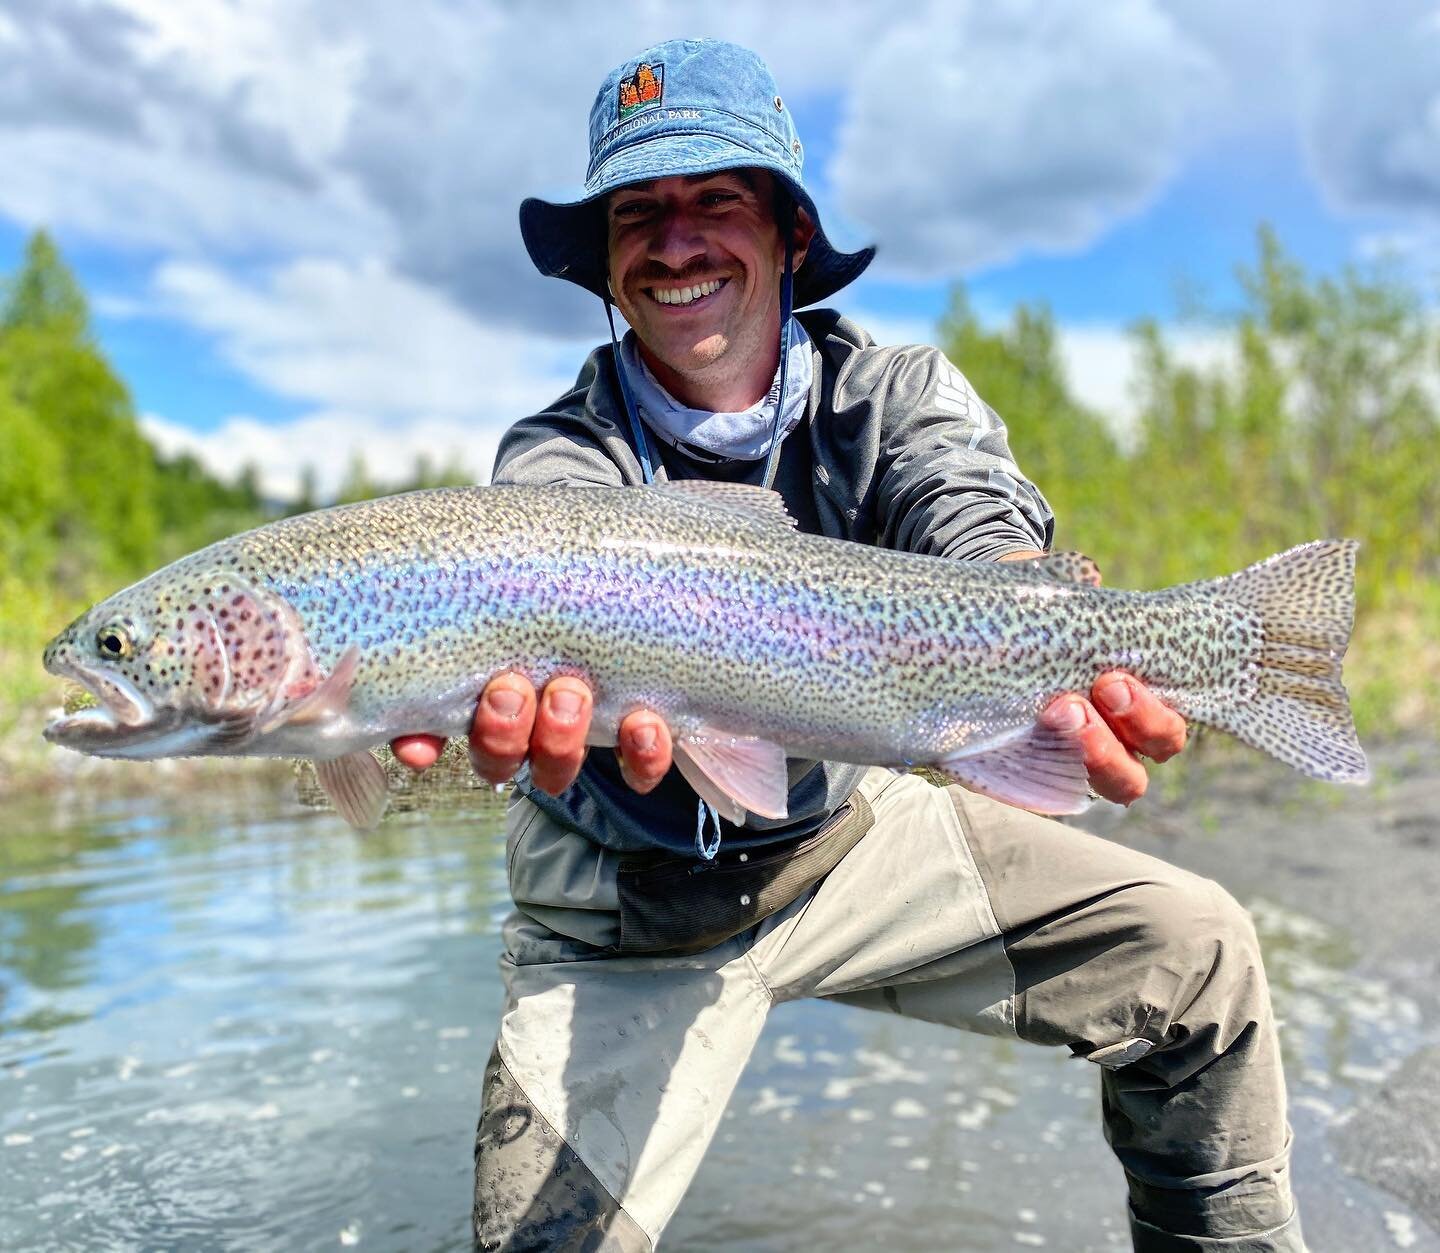 Guided Alaska Fly Fishing Trips